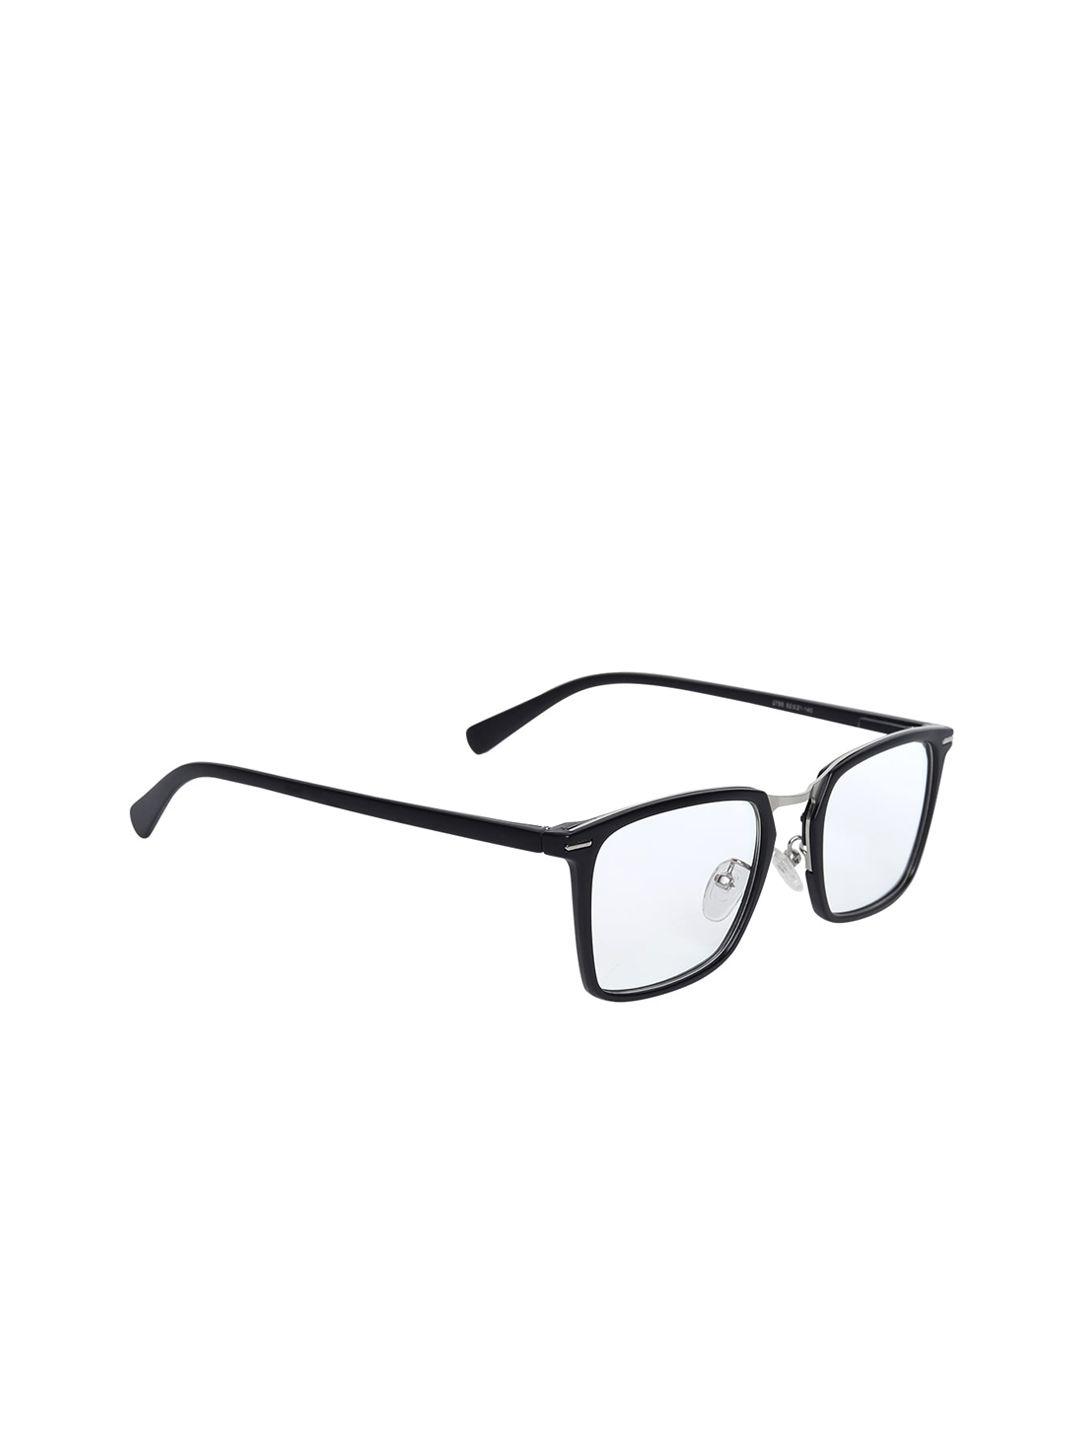 peter jones eyewear unisex solid anti glare lens full rim optical square frames 2755s